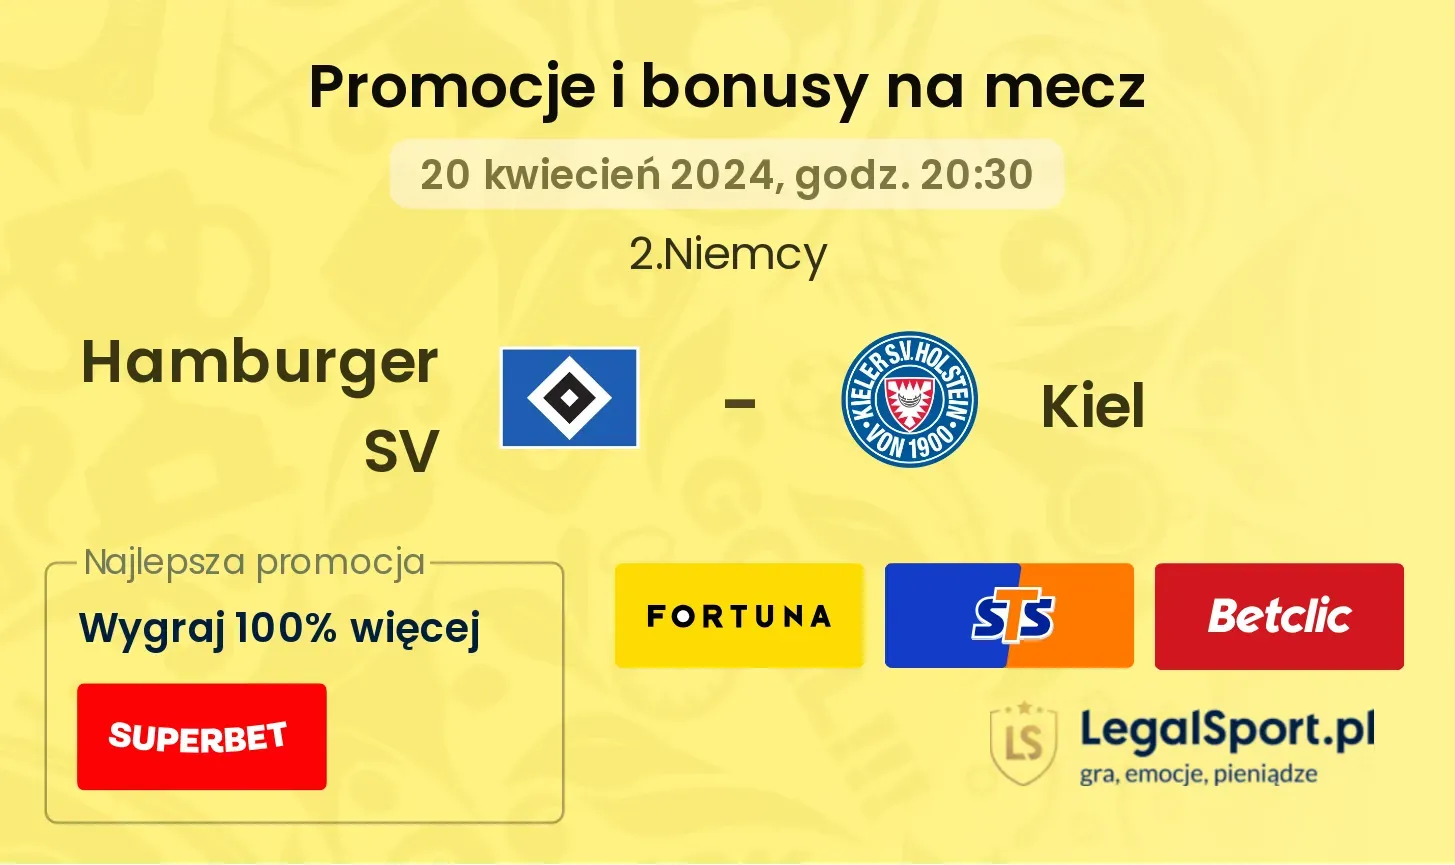 Hamburger SV - Kiel promocje bonusy na mecz